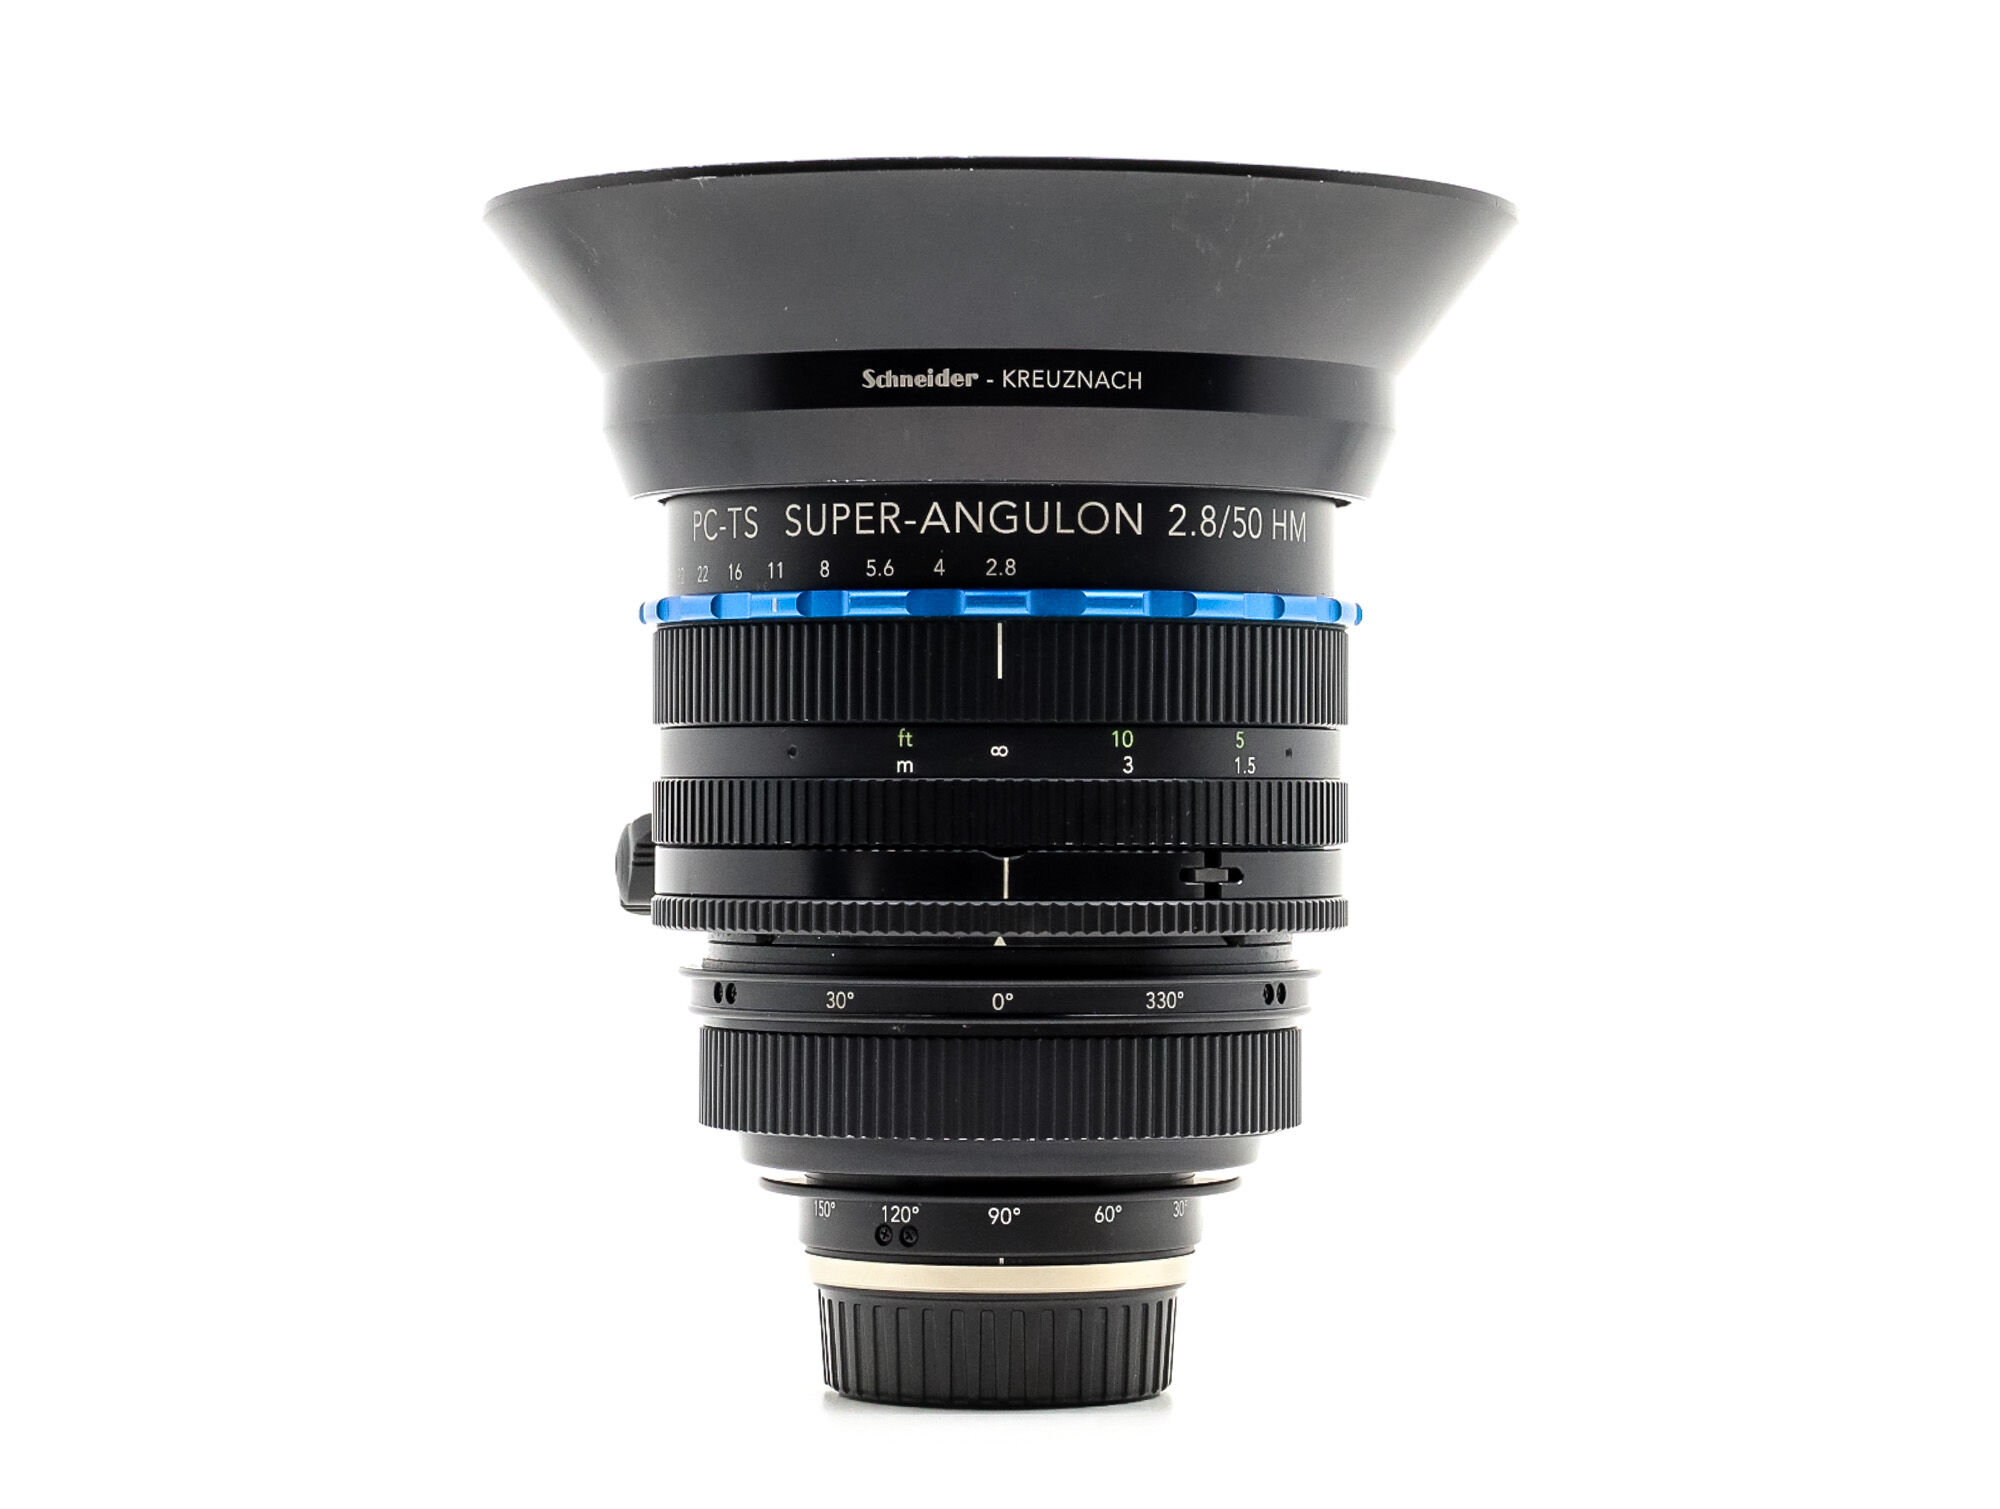 Schneider PC-TS Super Angulon 50mm f/2.8 Nikon fit (Condition: Excellent)